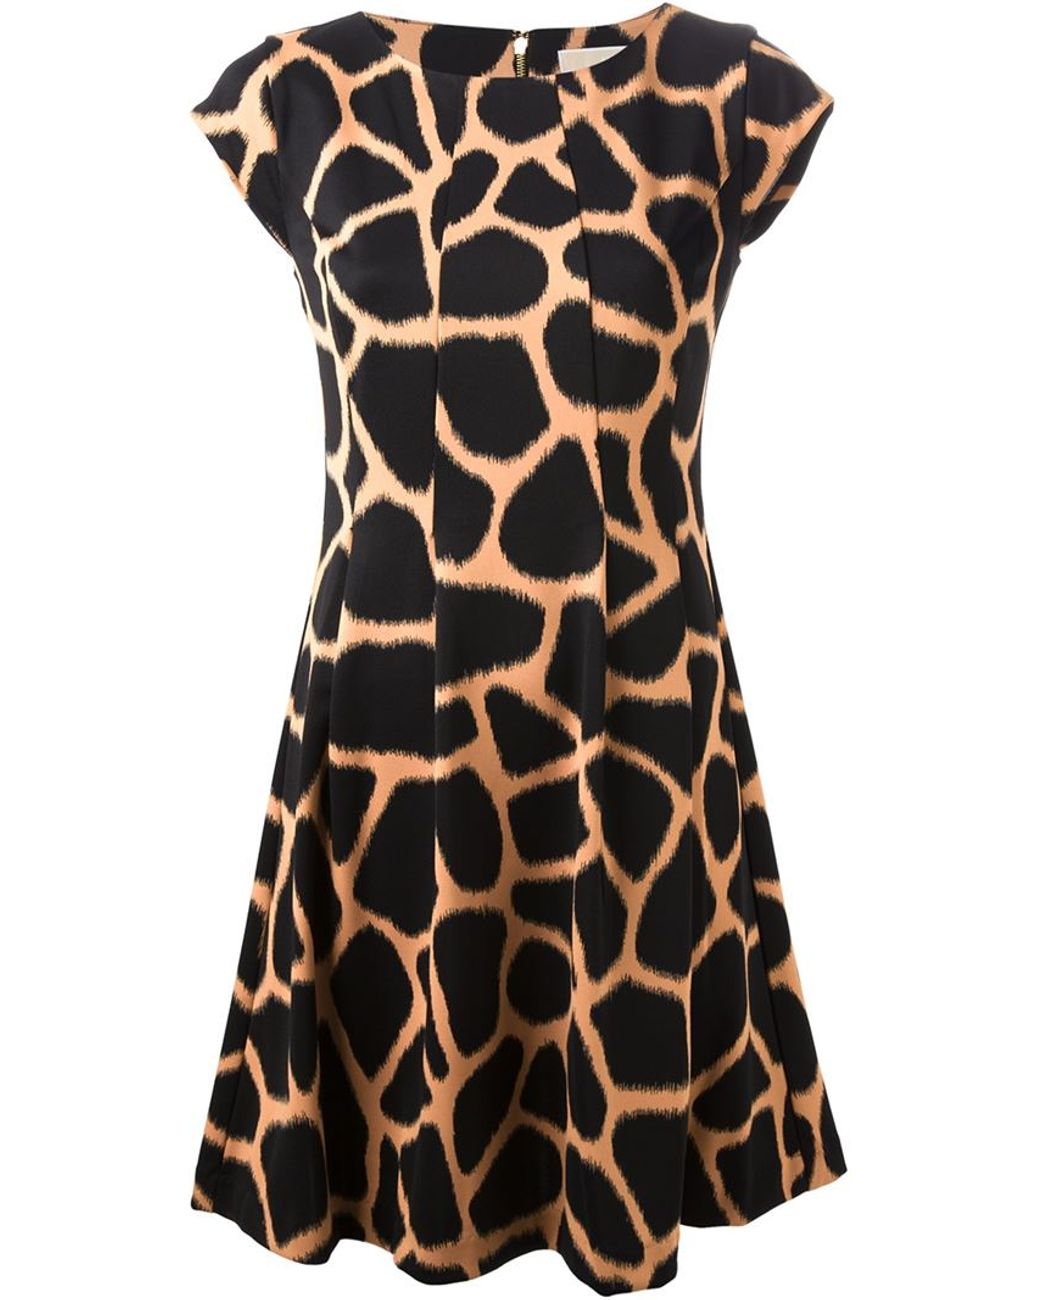 MICHAEL Michael Kors Women's Black Giraffe Print Dress